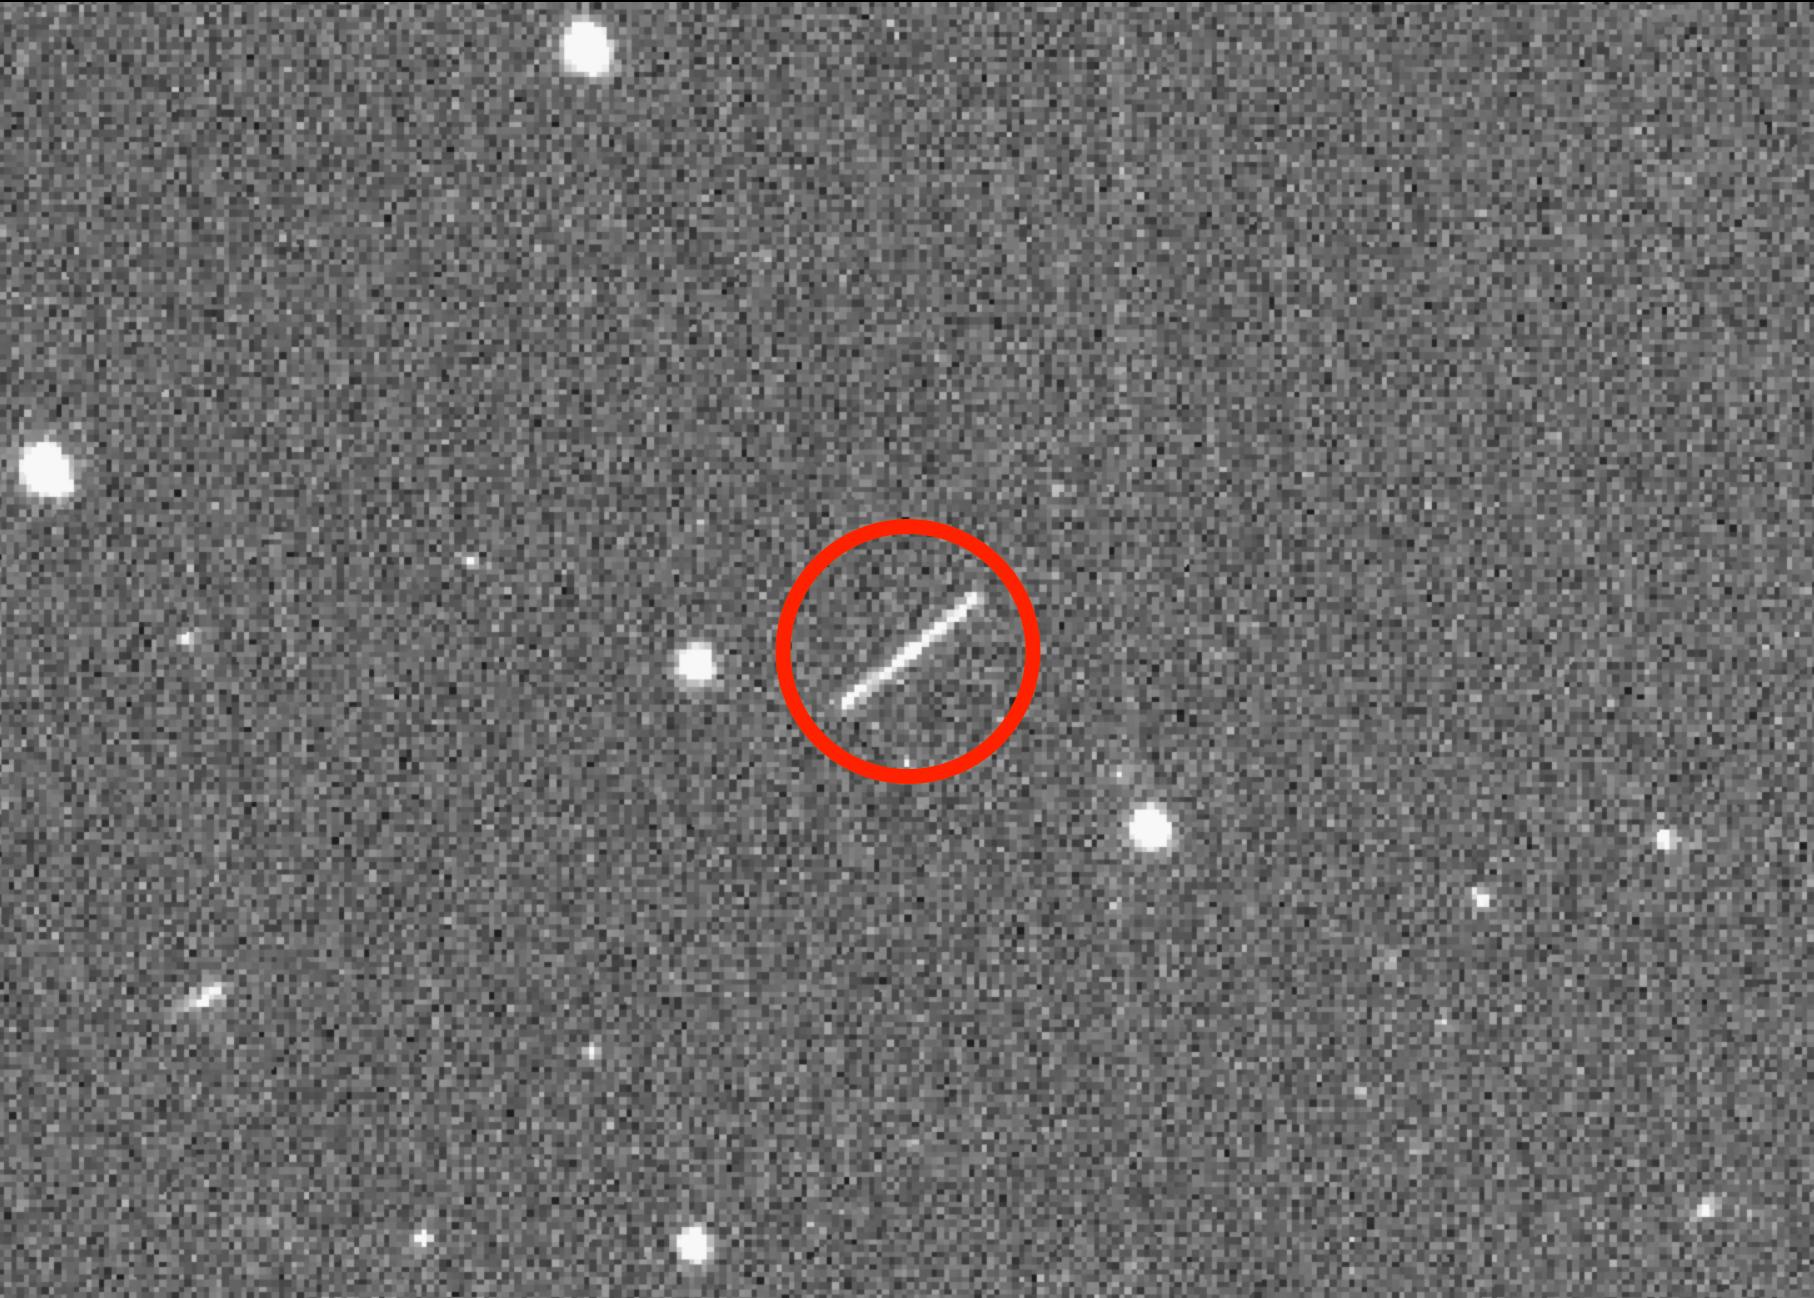 PIA24038: Asteroid 2020 QG as Seen Through ZTF Telescope